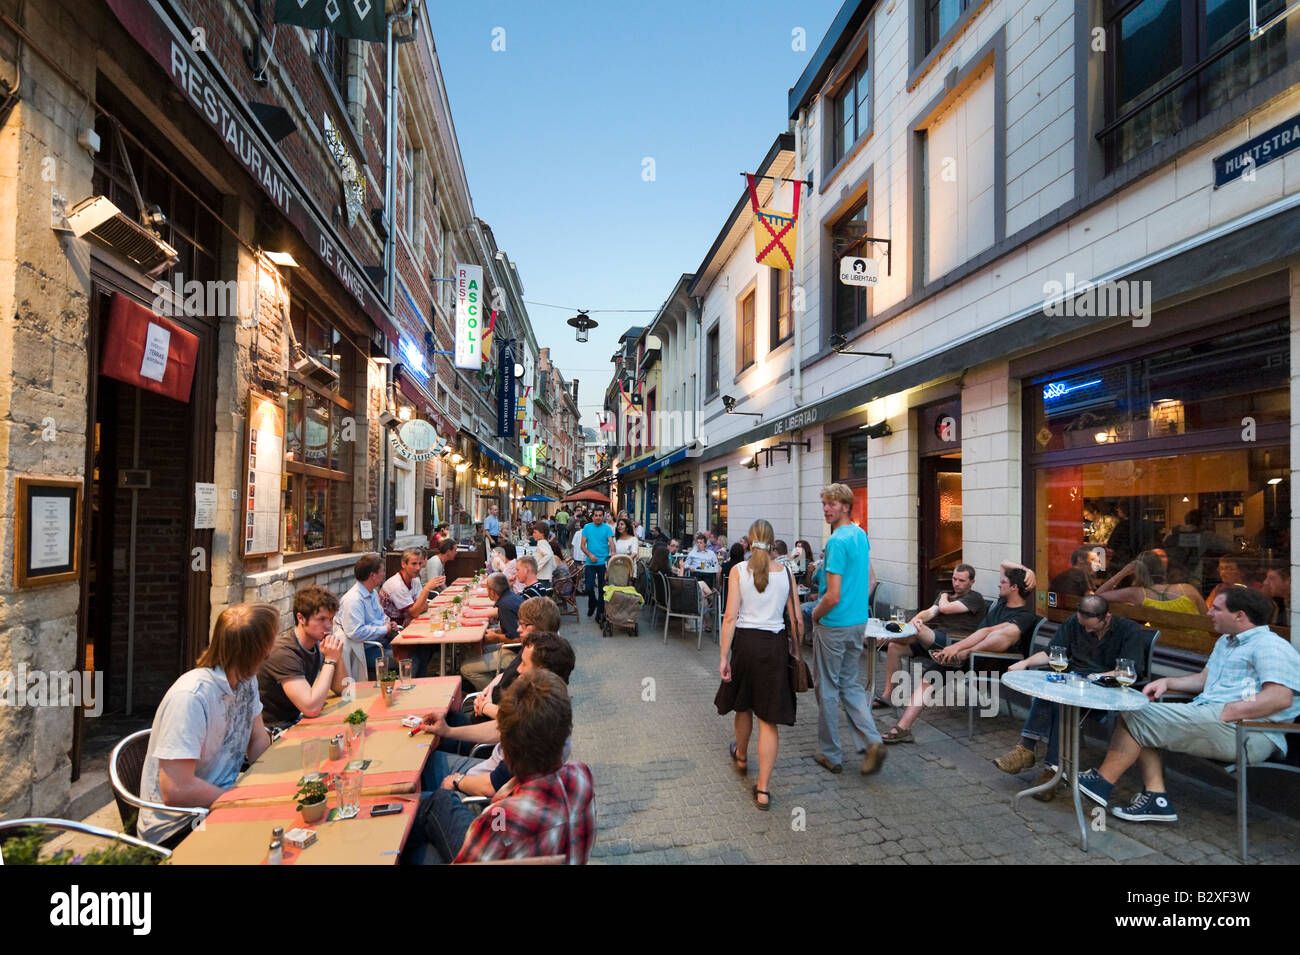 Sidewalk restaurants in the narrow pedestrianised street of Muntstraat, Leuven, Belgium Stock Photo